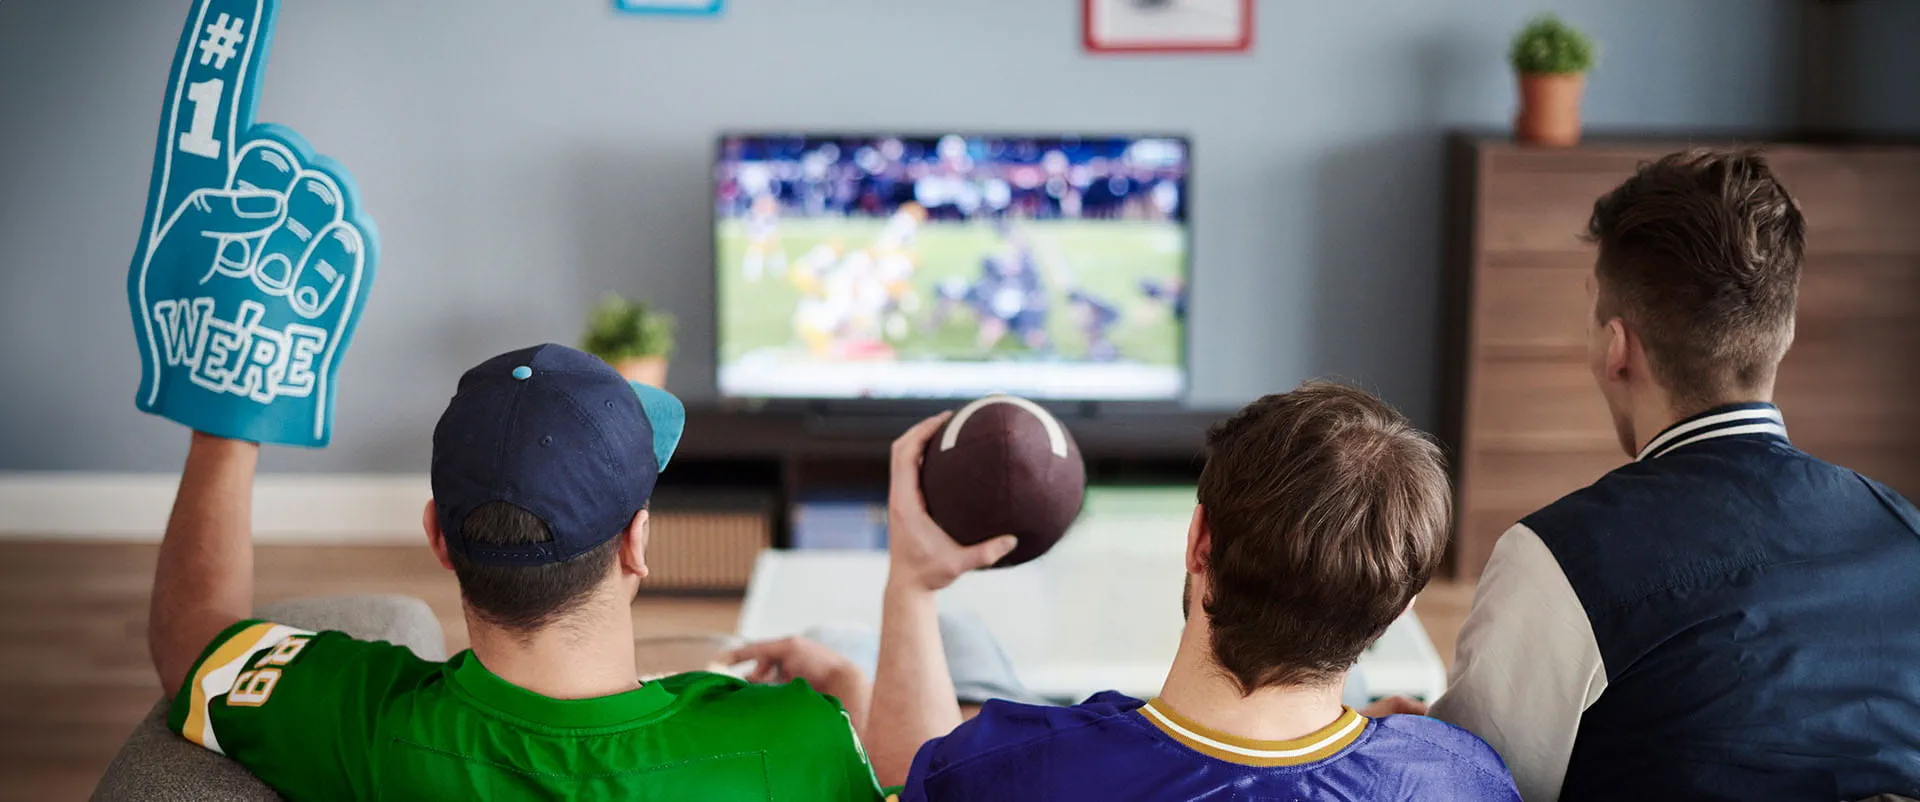 Football fans stream the big game over fast fiber internet. 